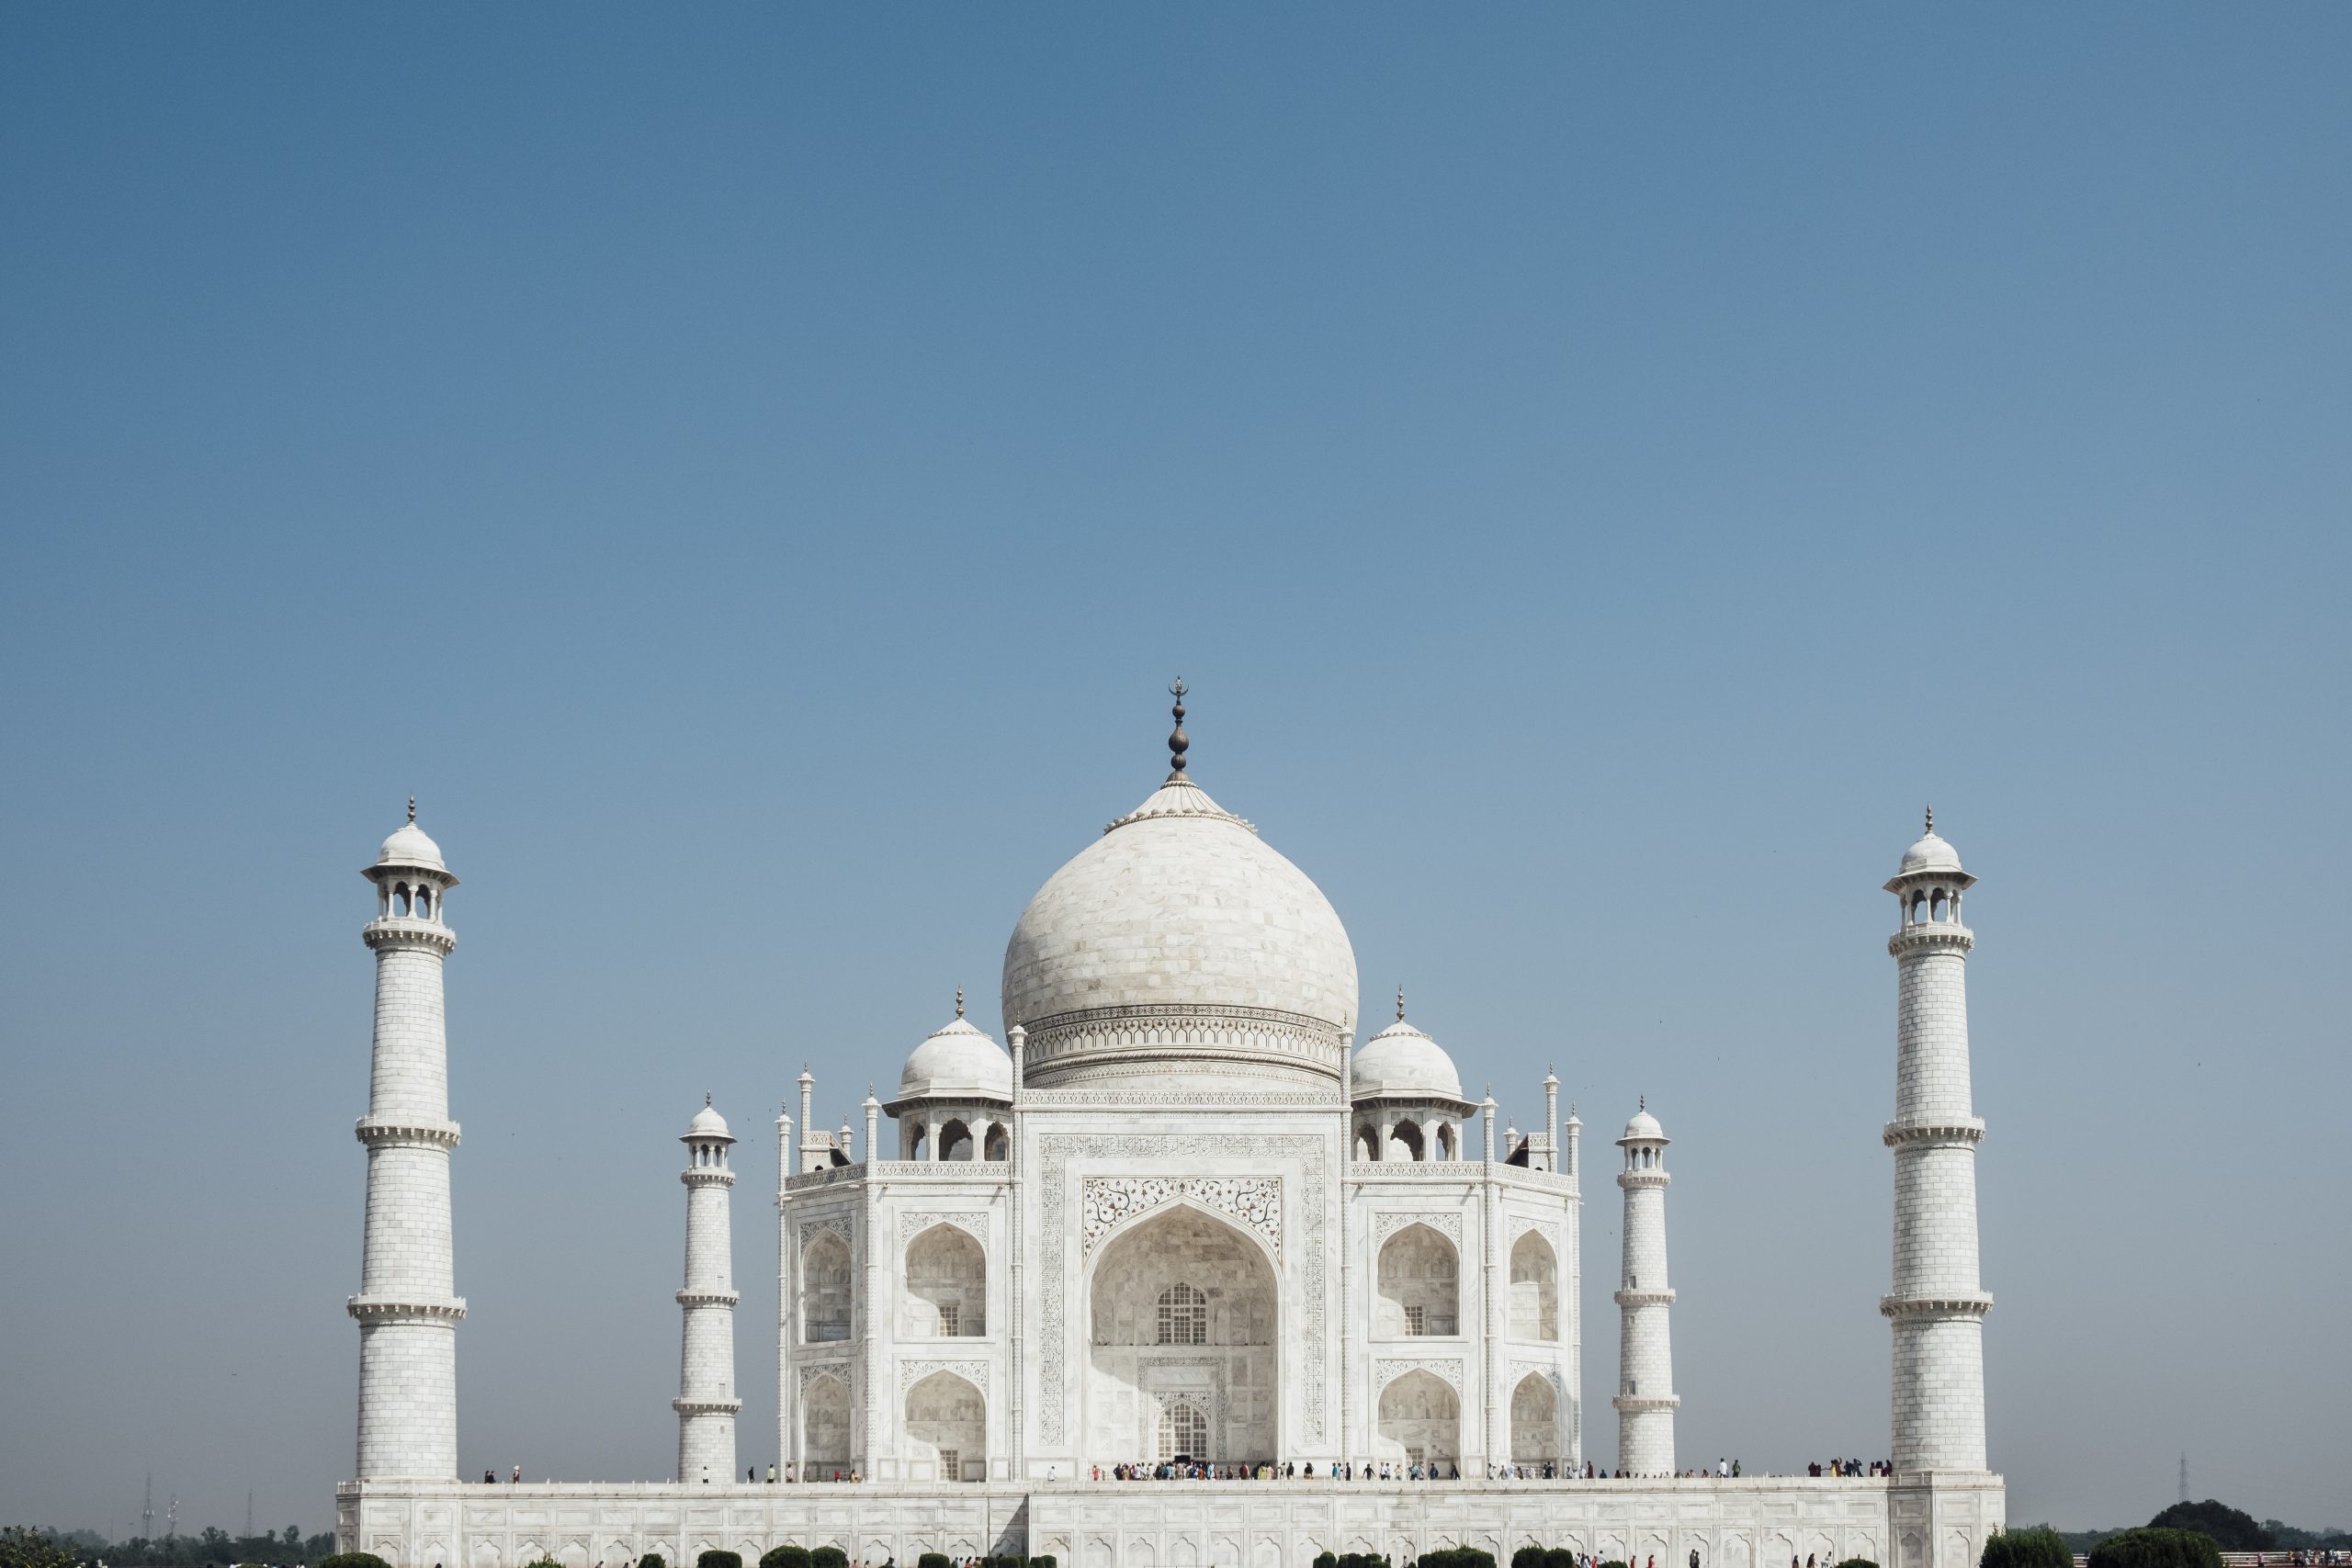 Taj Mahal, luxury building in India